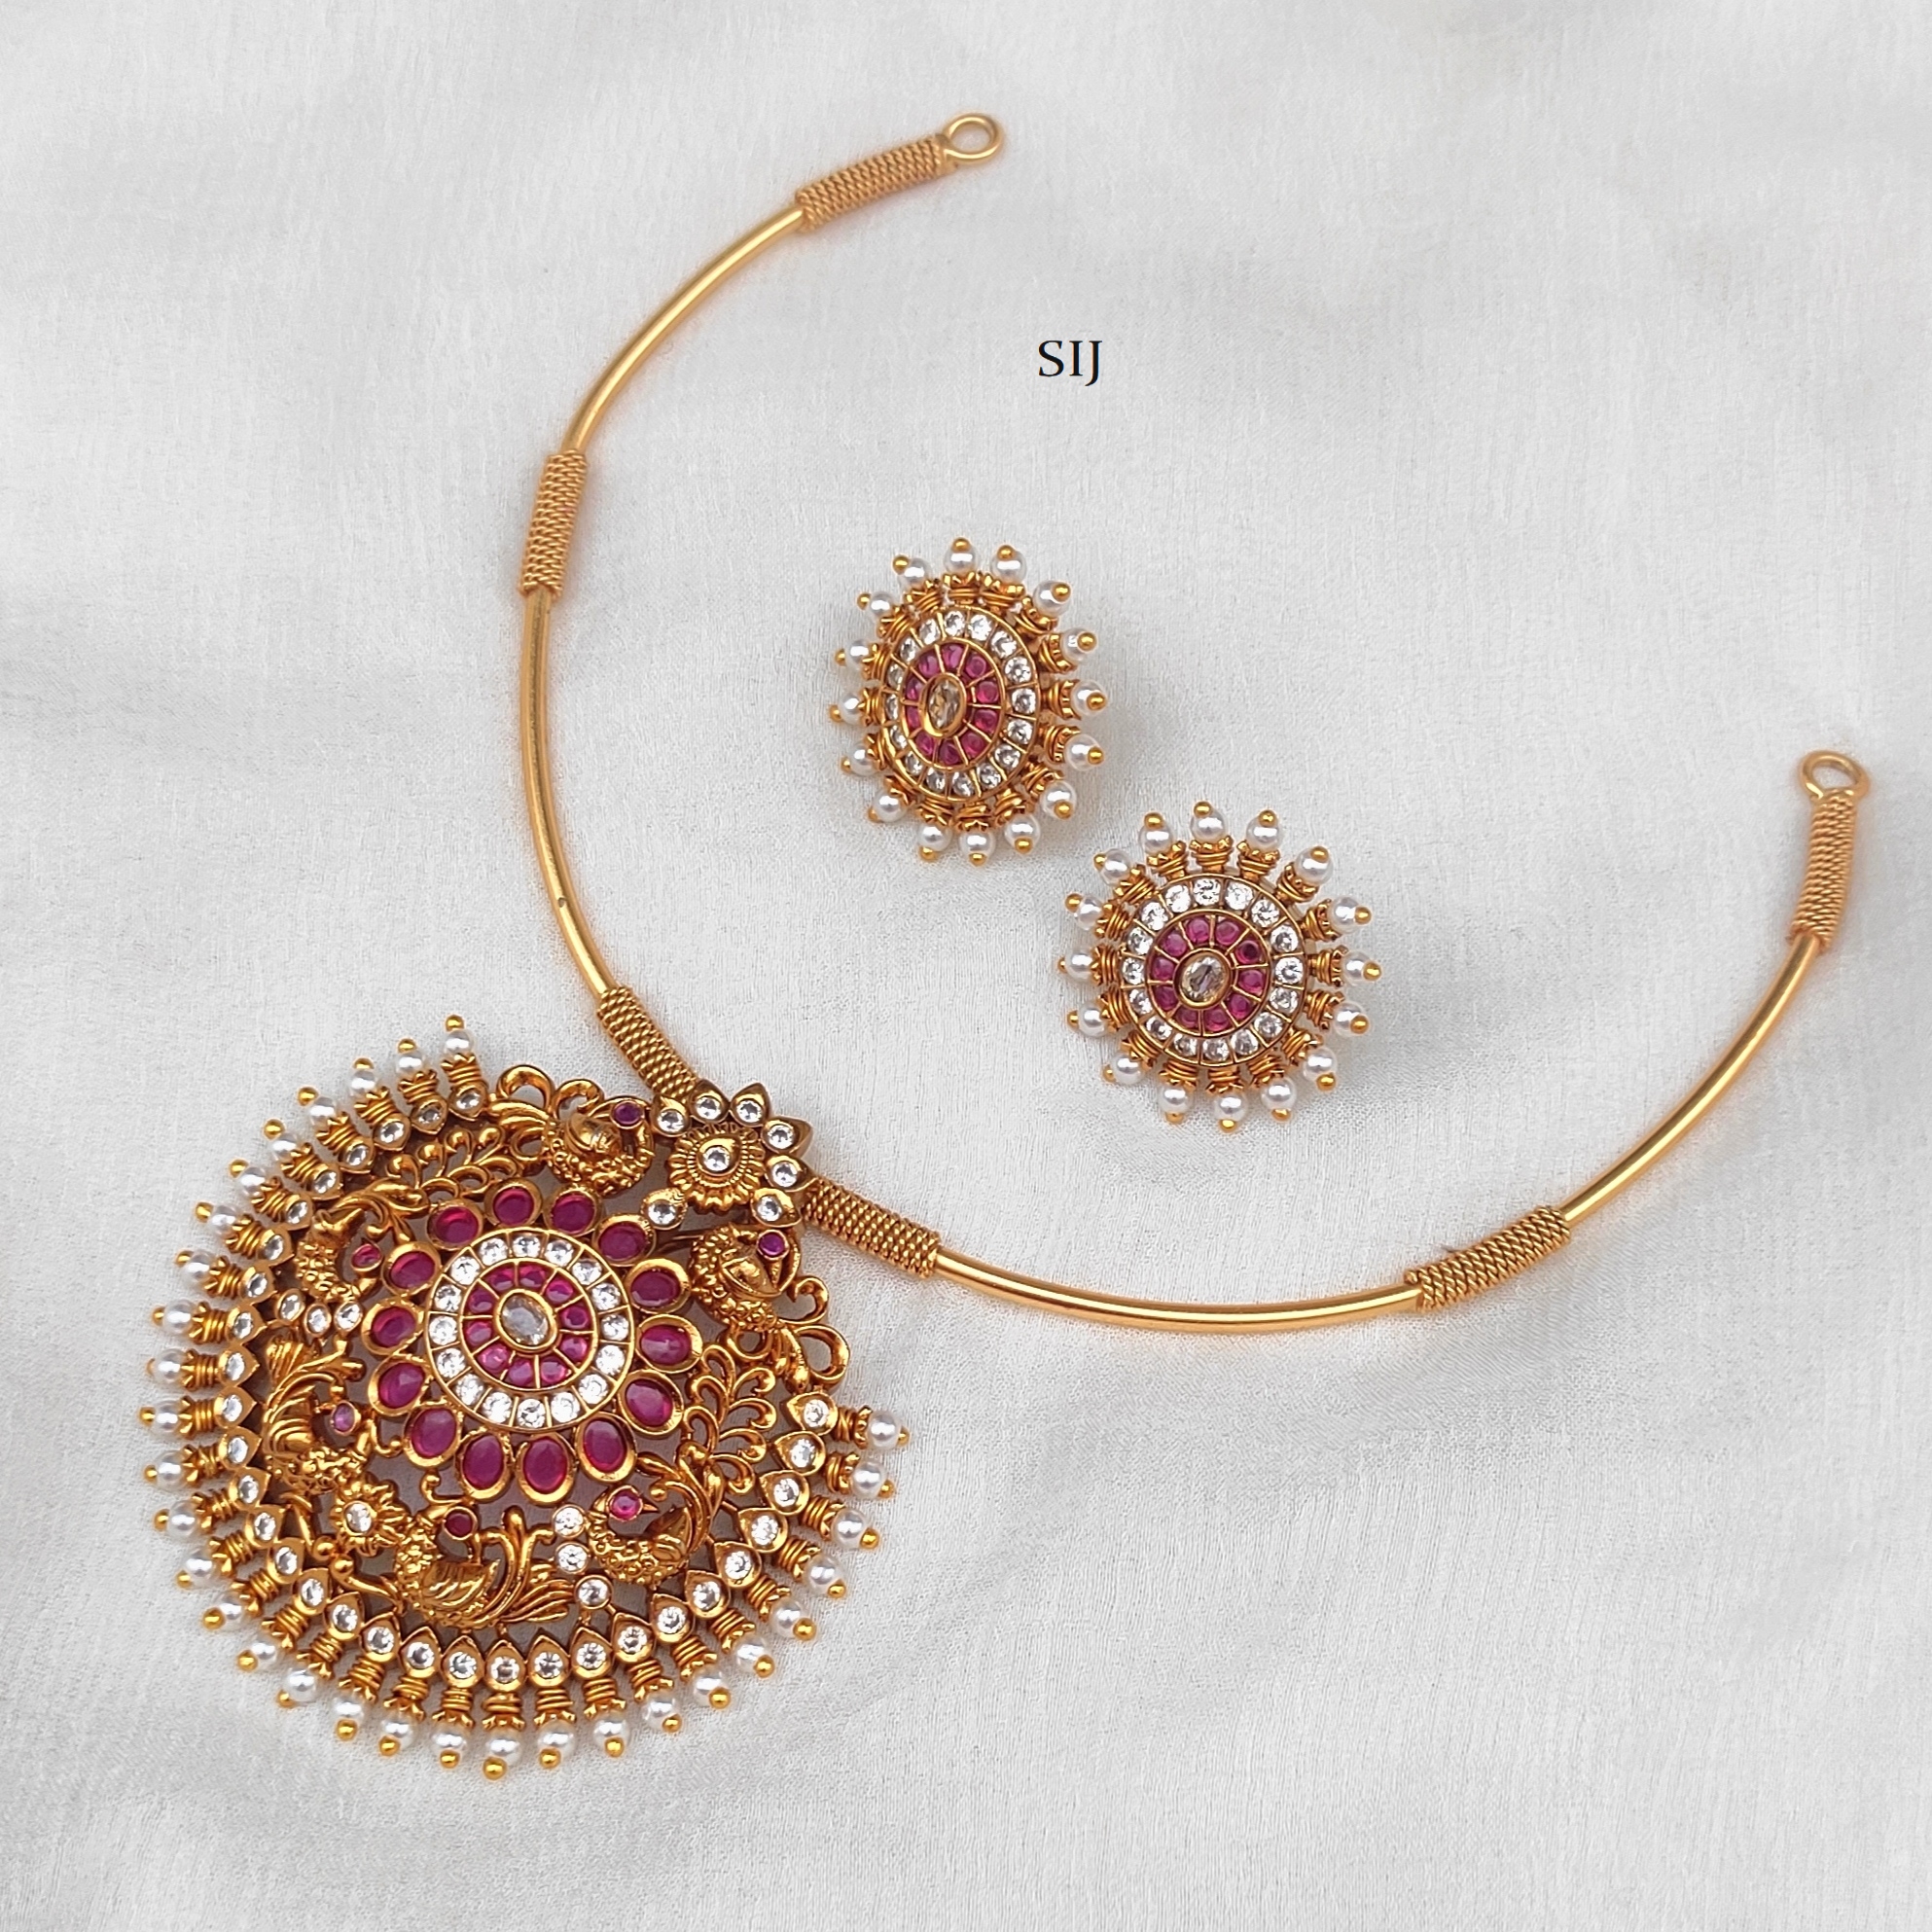 Antique Hasli Necklace with Peacocks Pendant